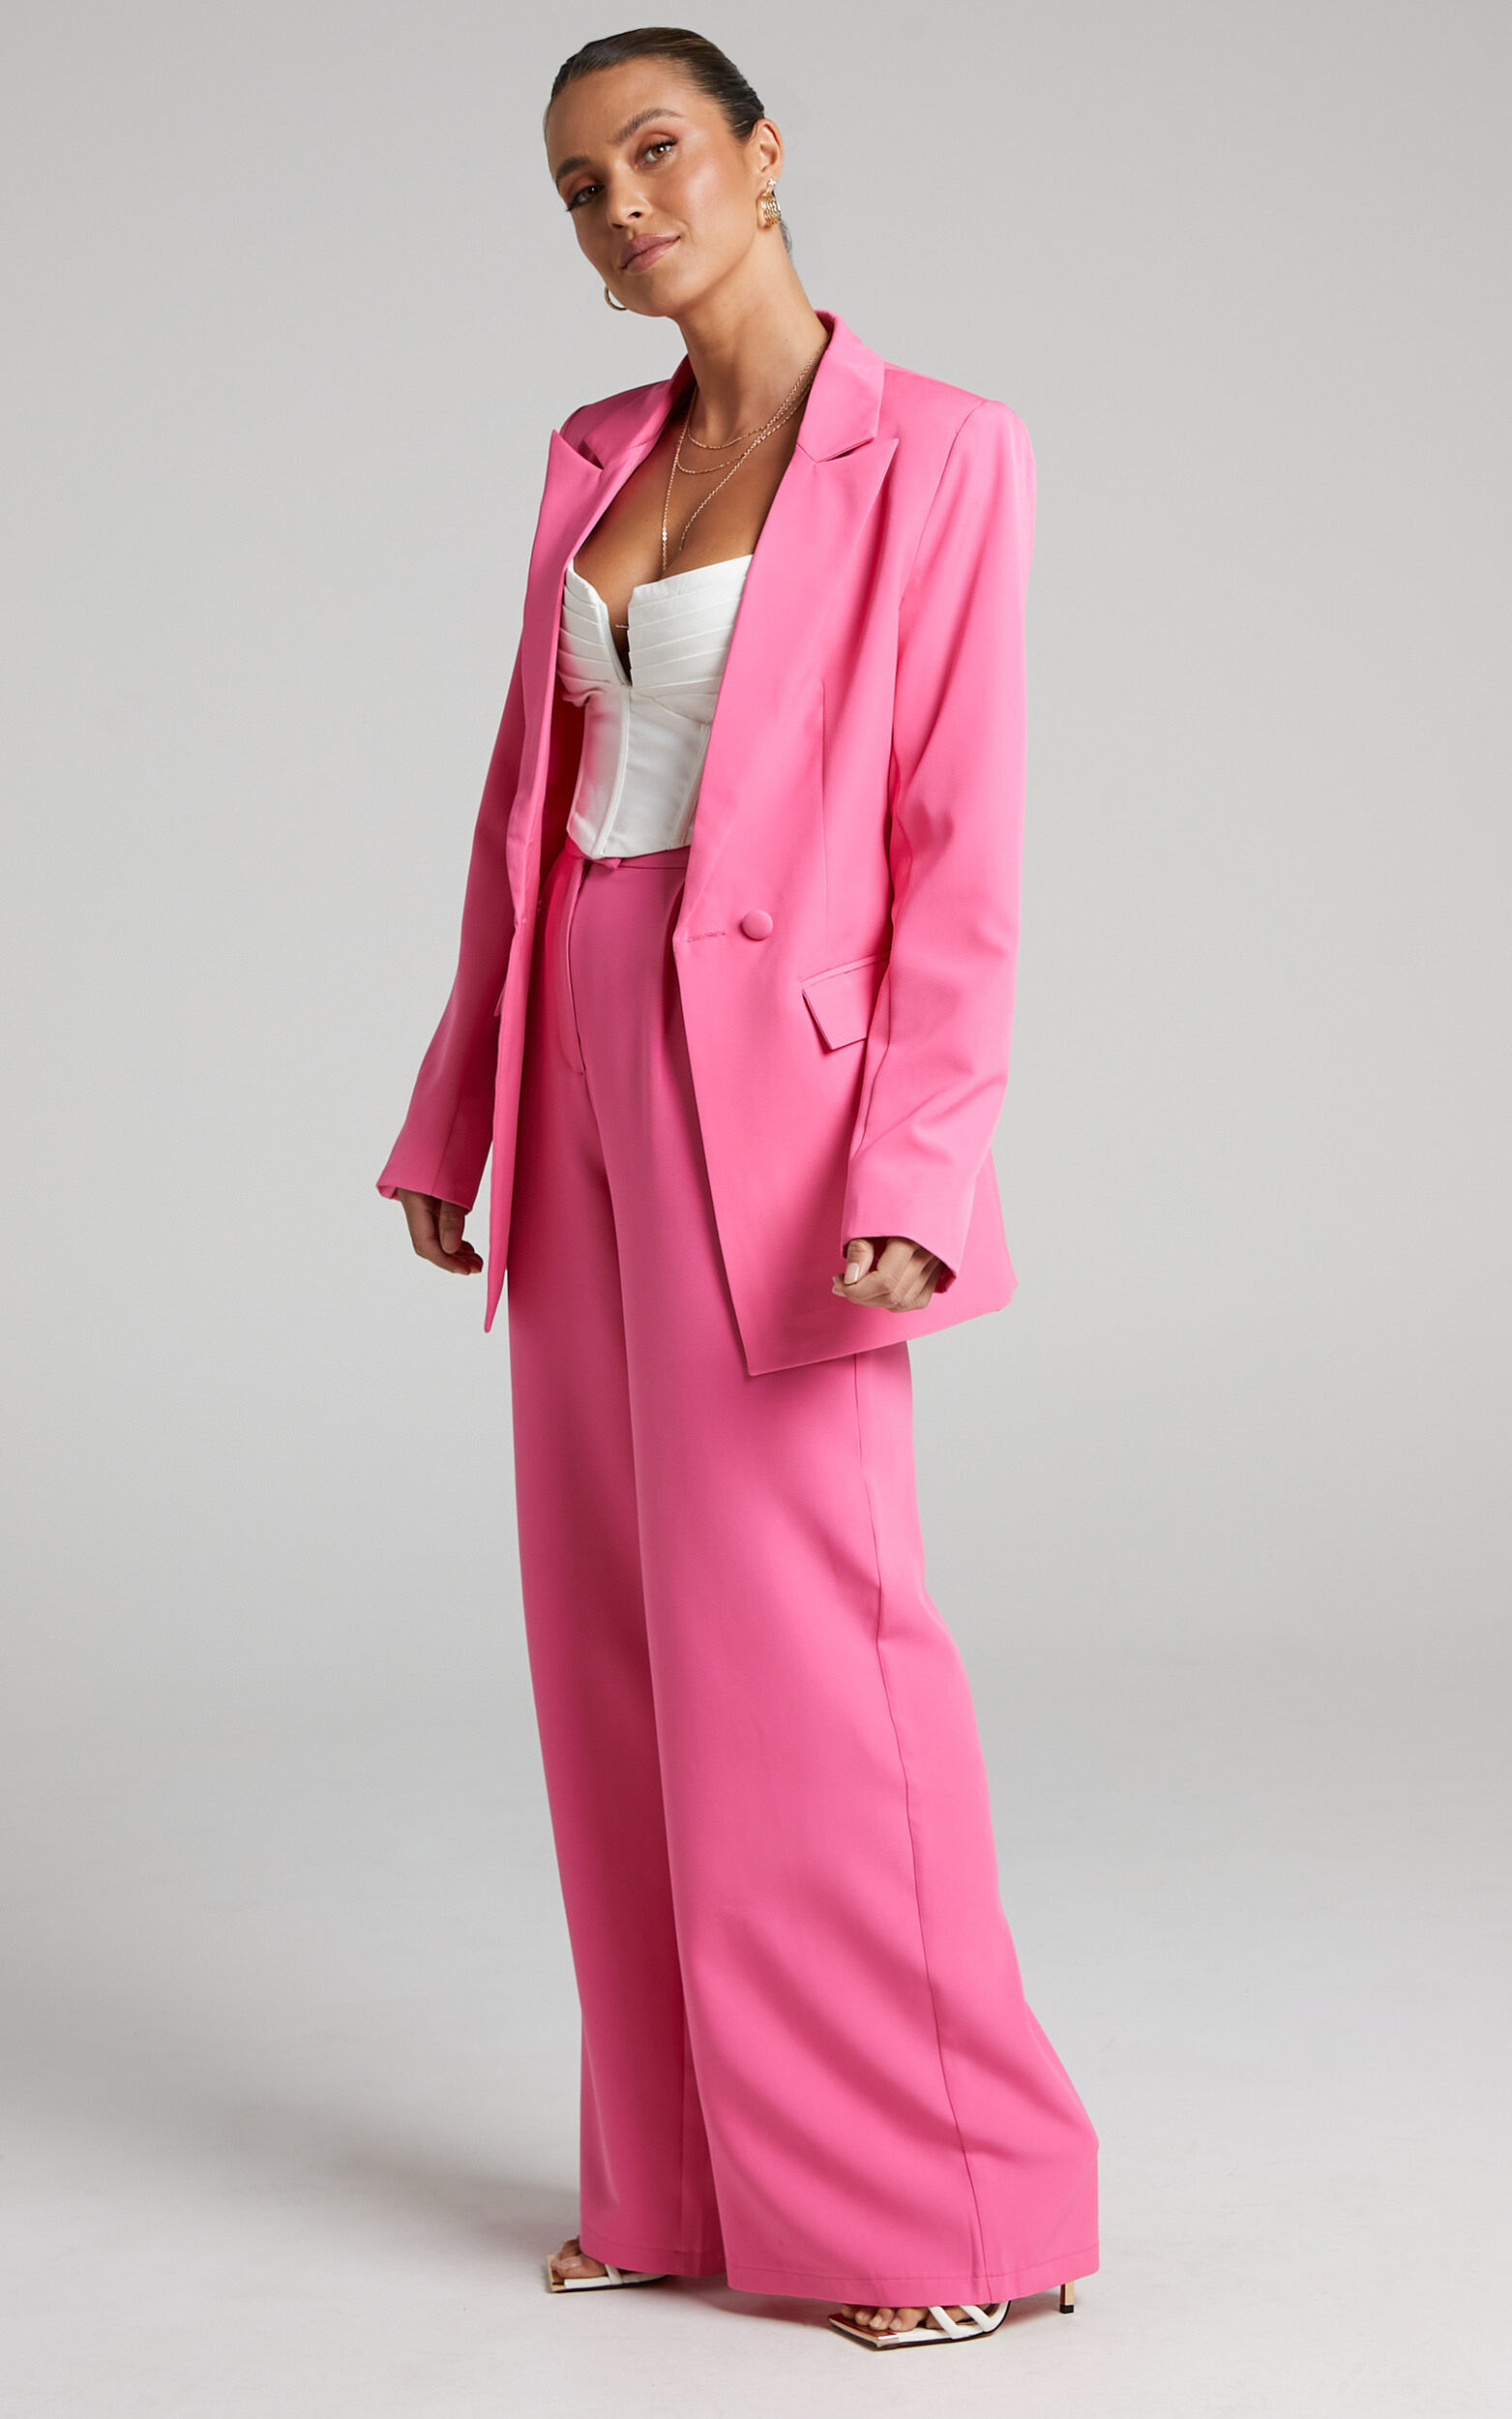 Caroline Pants - High Waisted Tailored Pants in Hot Pink | Showpo NZ